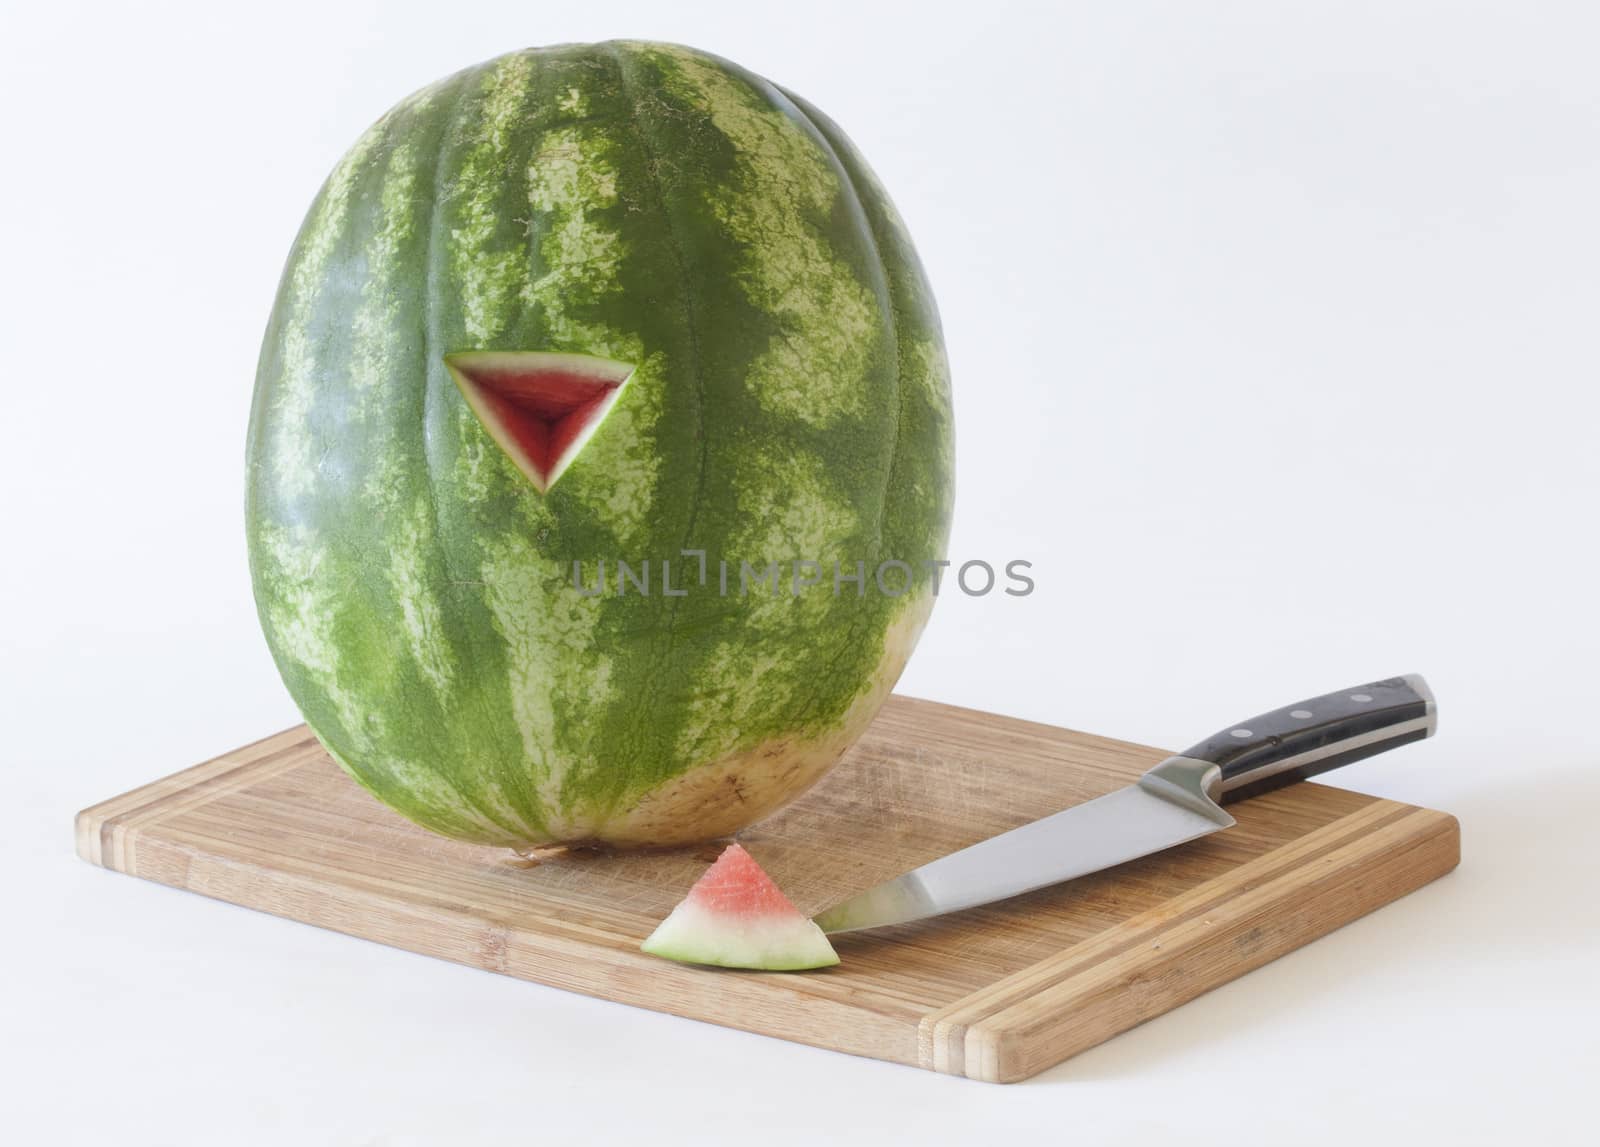 watermelon by ivto